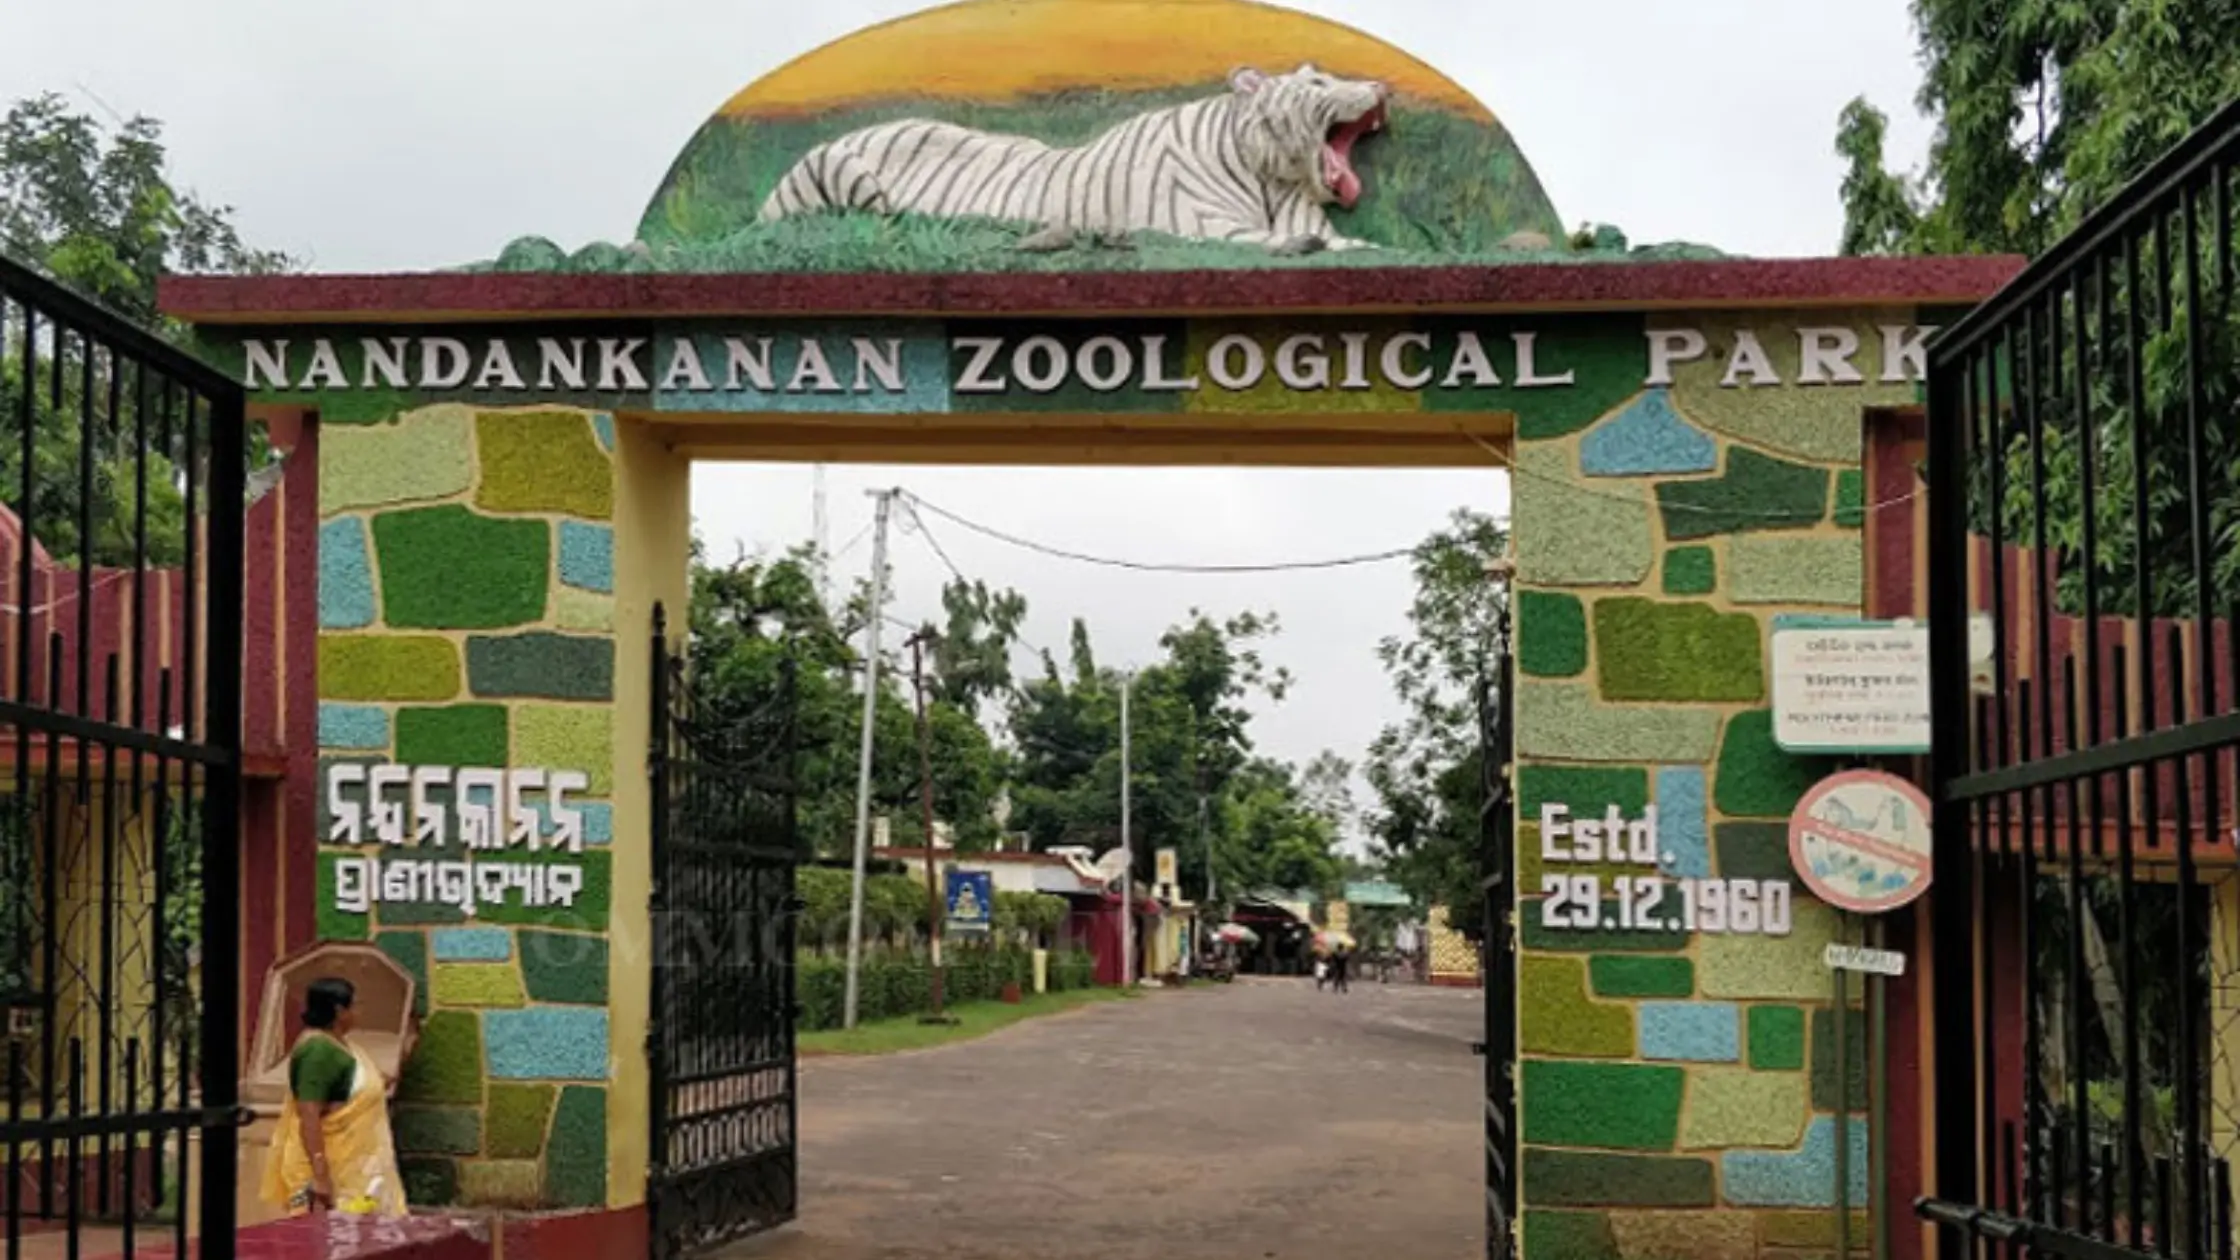 Nandankanan zoological park front gate